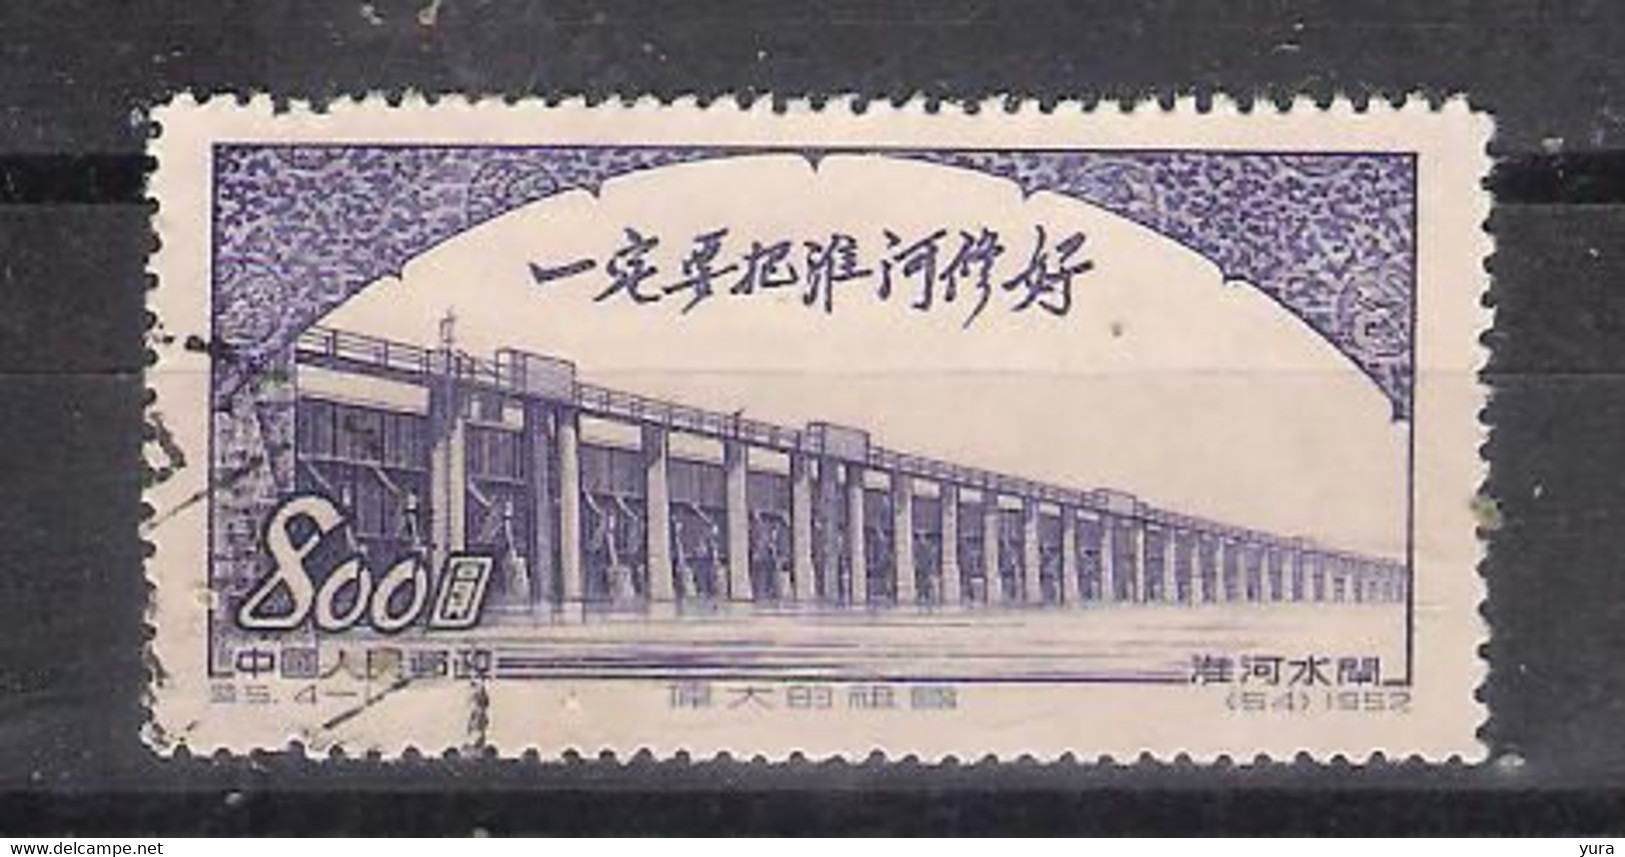 Chine Peoples  Republic  1952  Mi Nr 183  (a8p2) - Usati